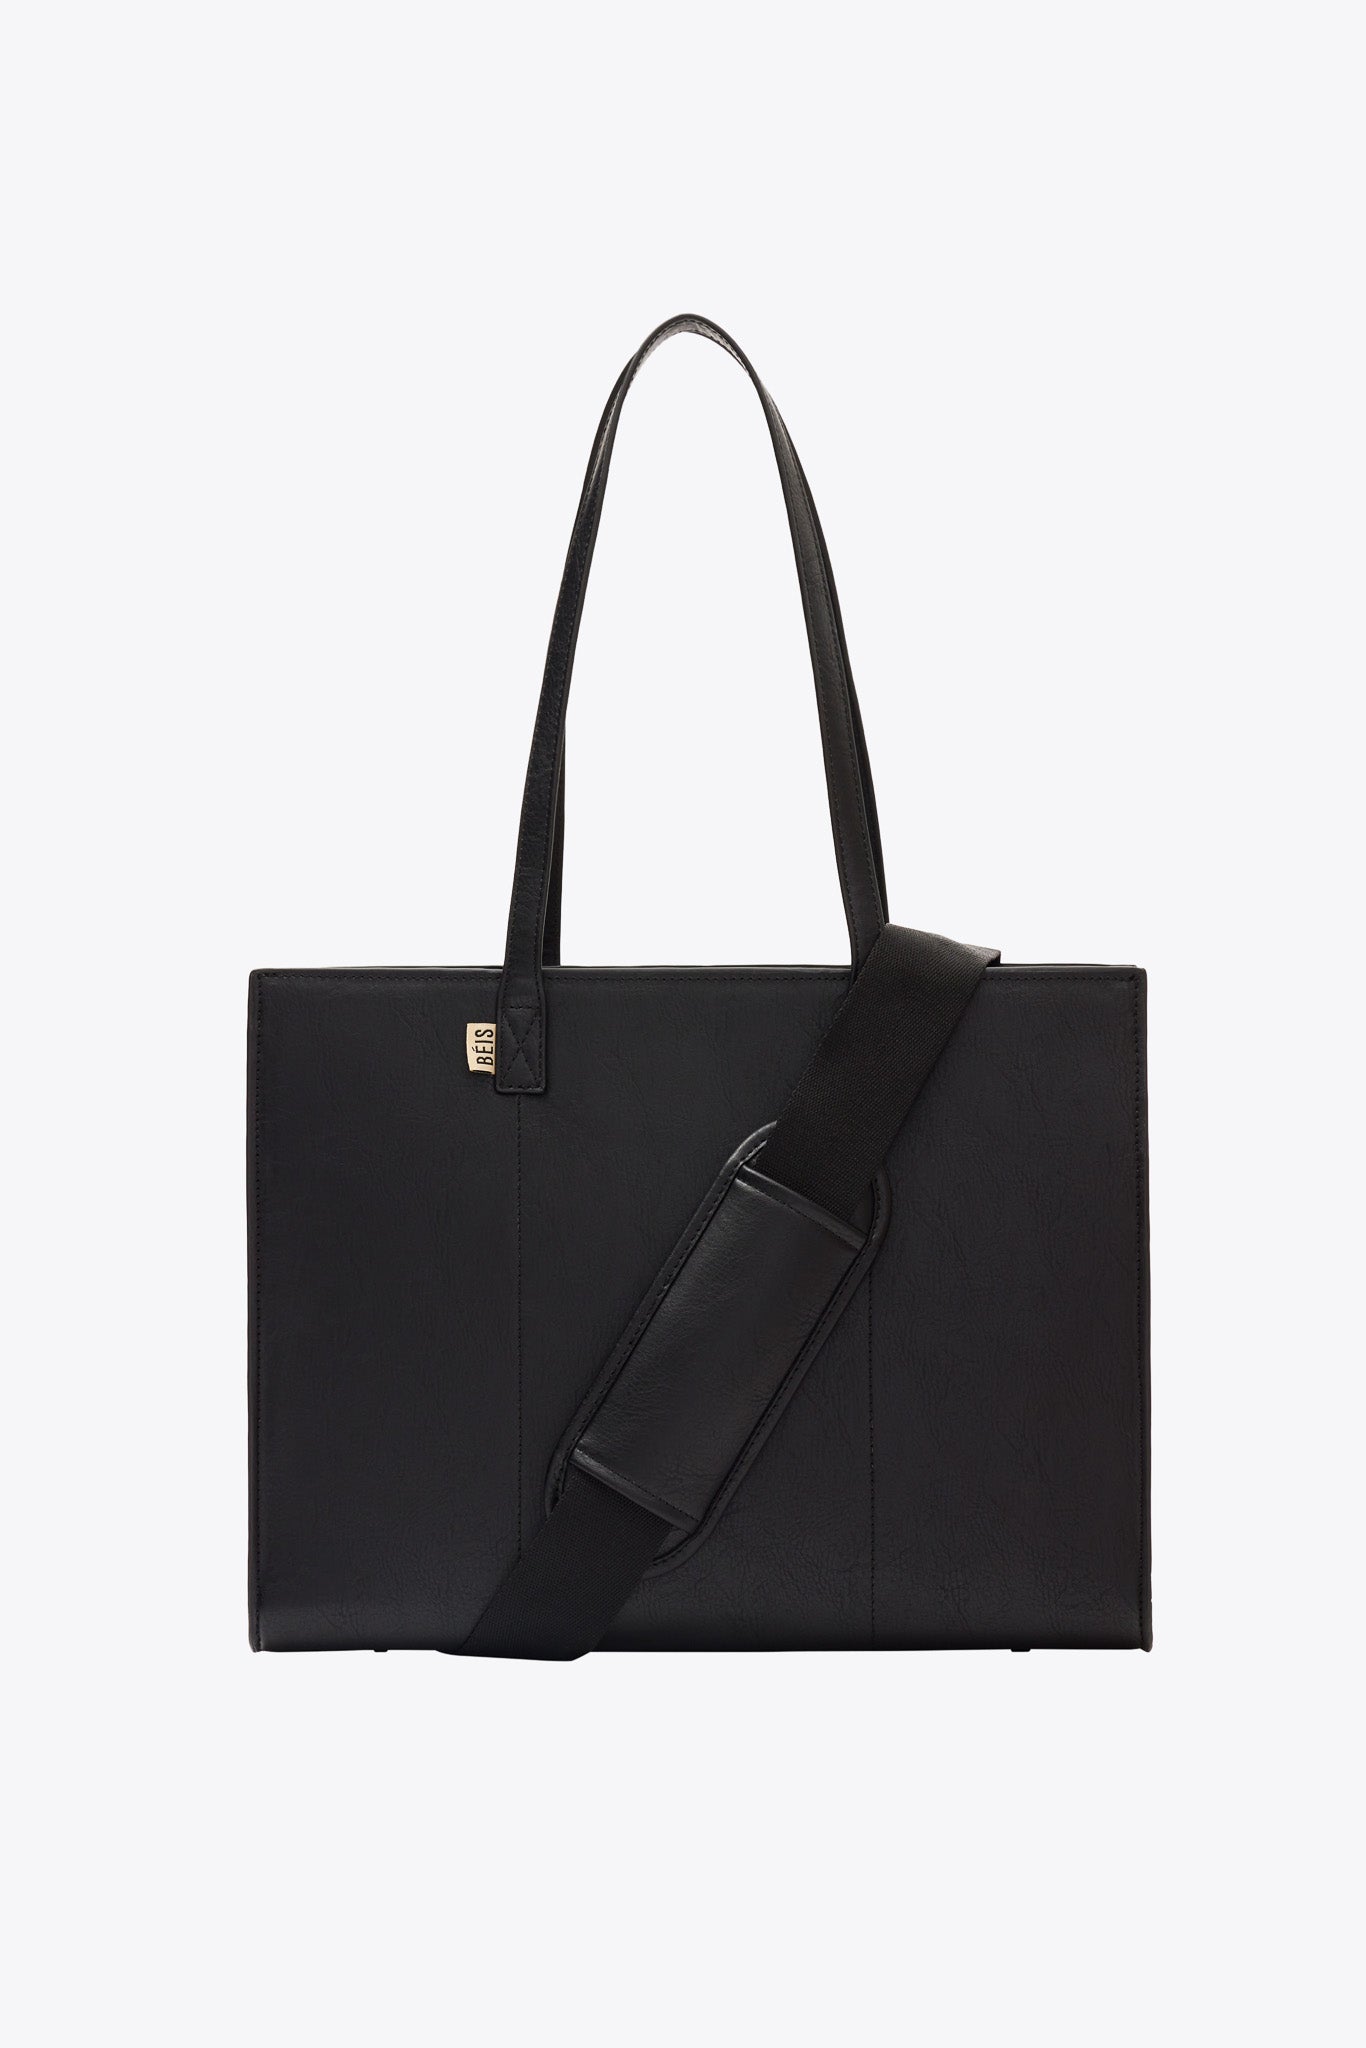 BÉIS 'The Work Tote' in Black - Work Bag For Women & Laptop Tote Bag